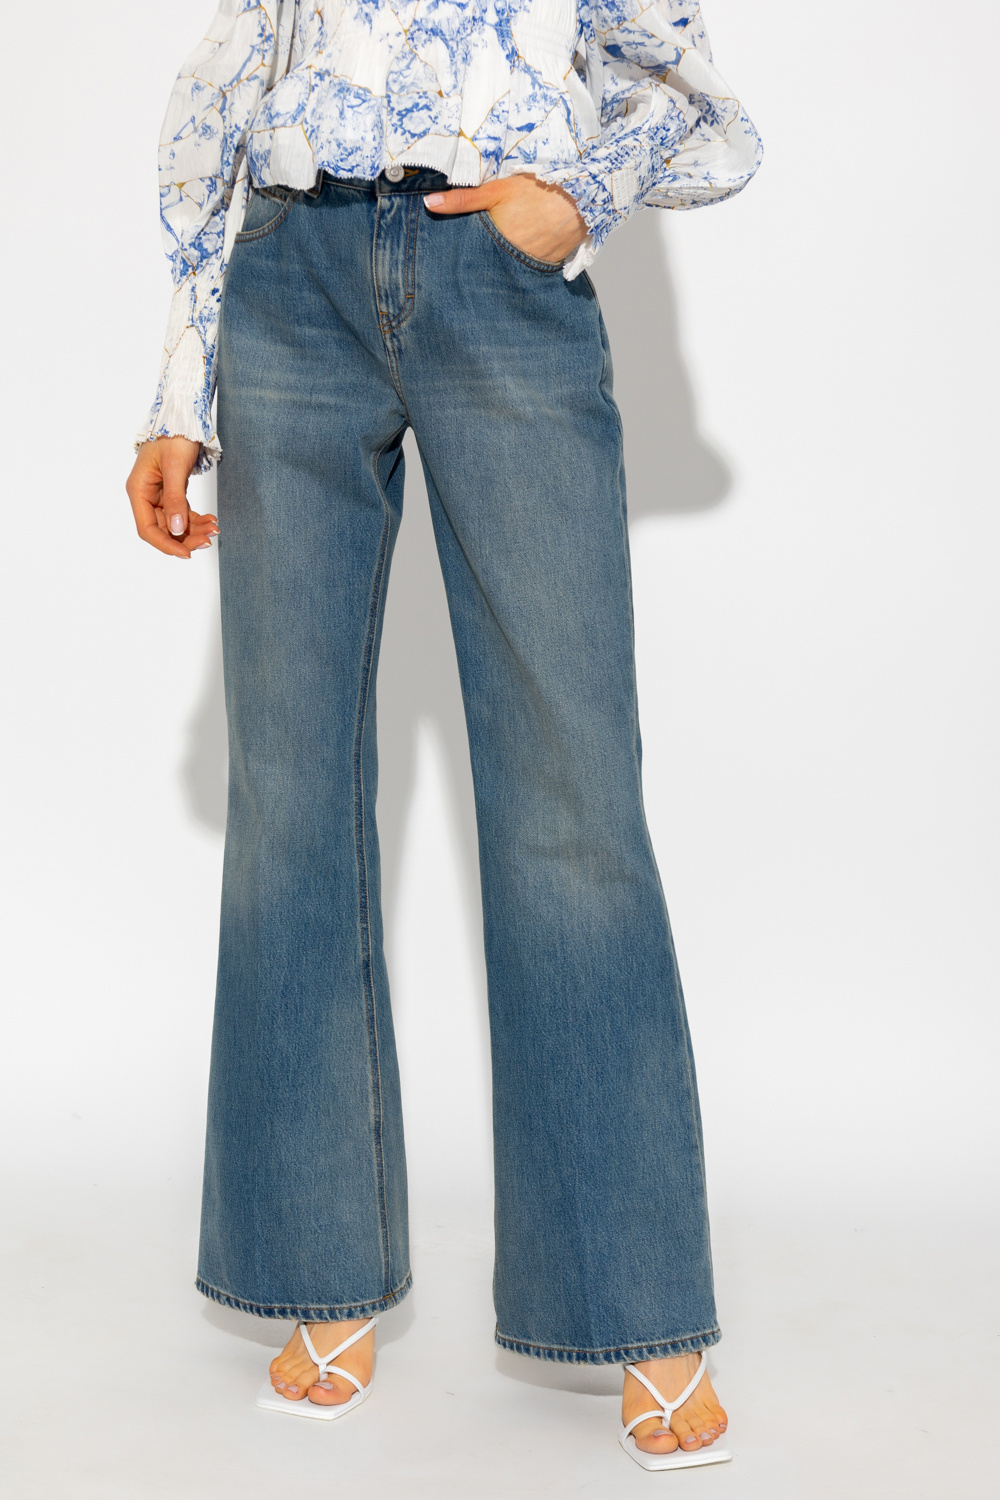 Victoria Beckham Marine Serre moon-print straight-leg jeans